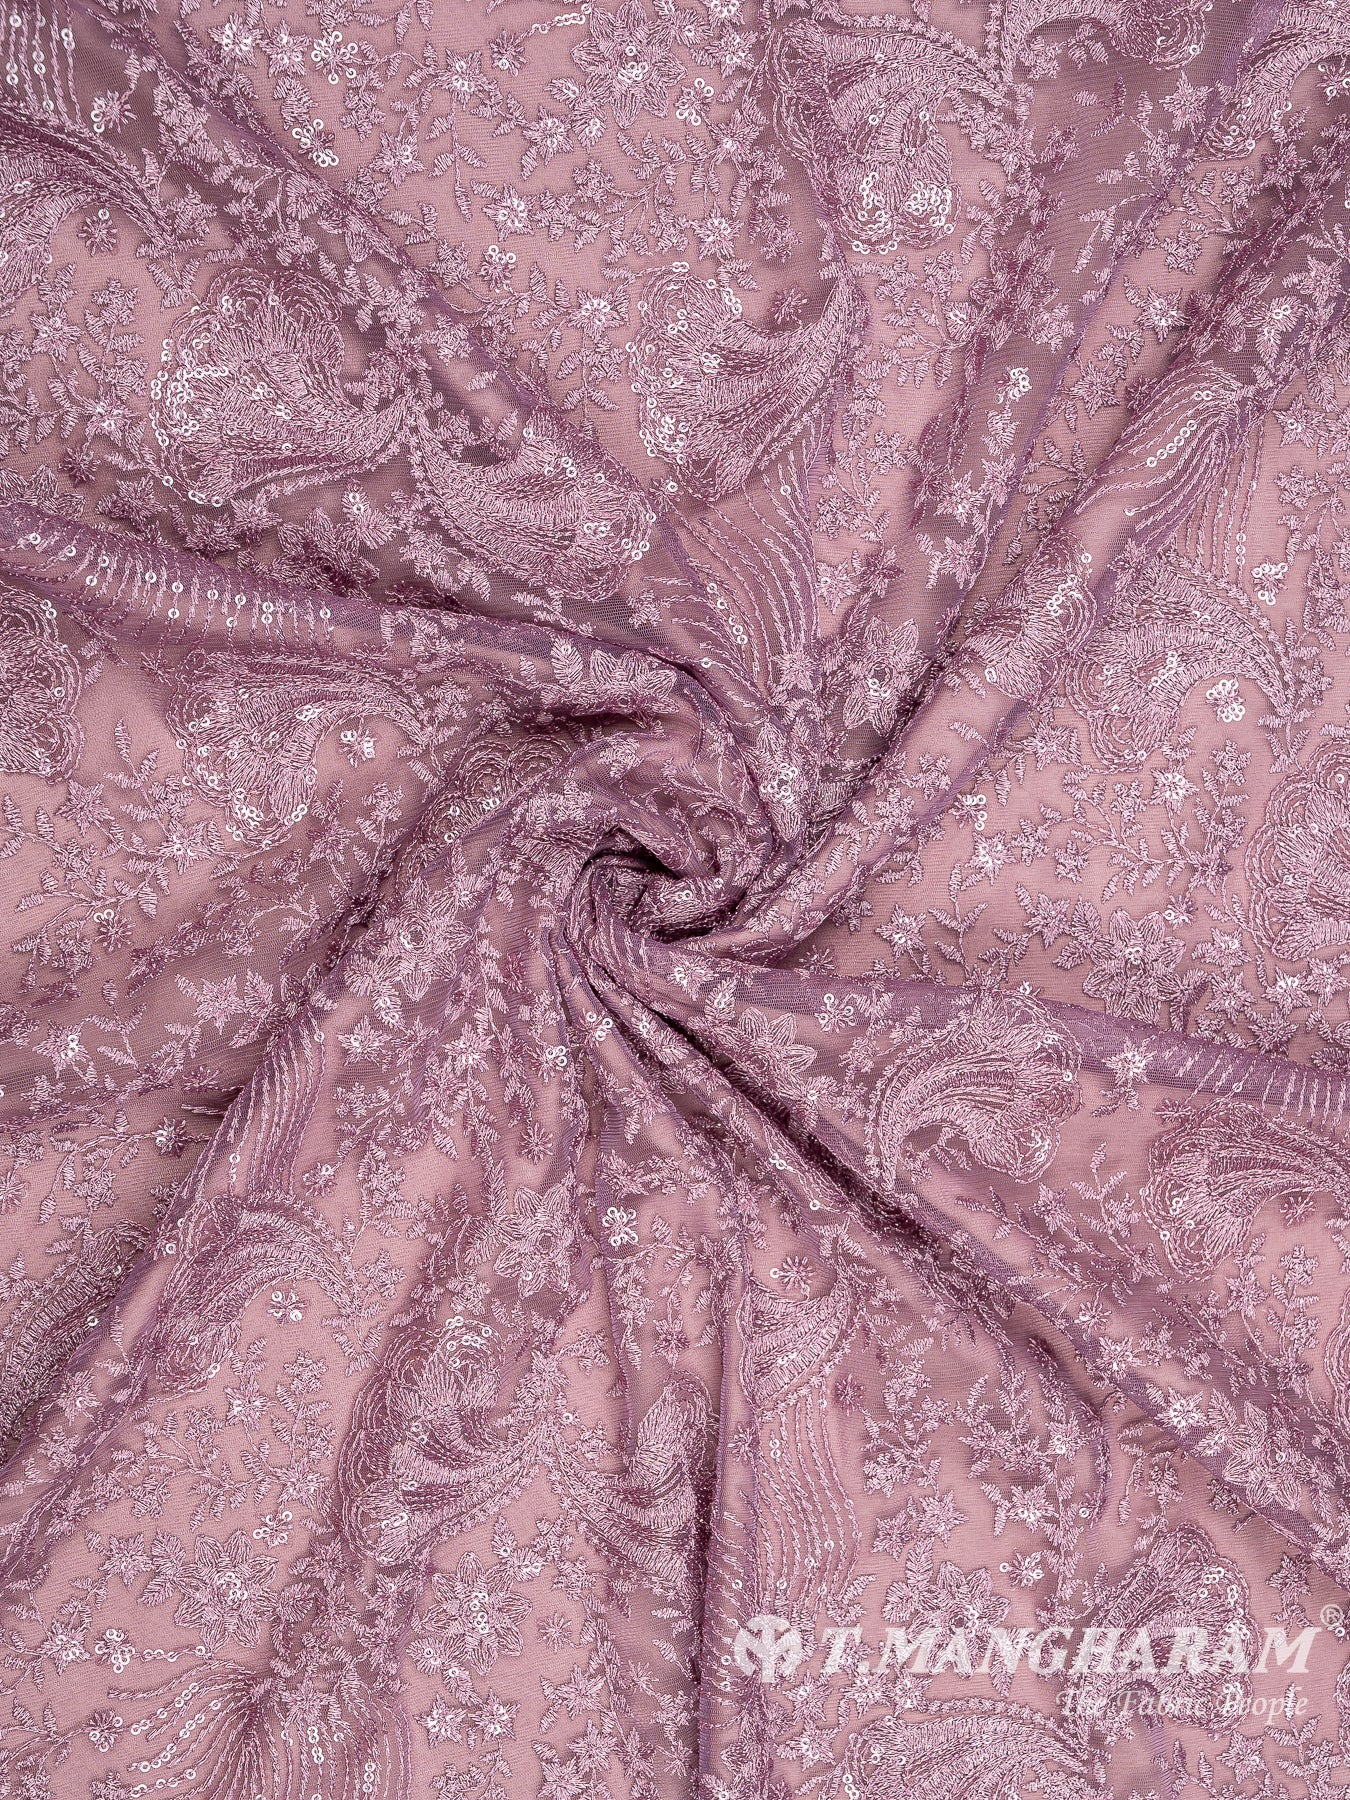 Violet Fancy Net Fabric - EC8079 view-1